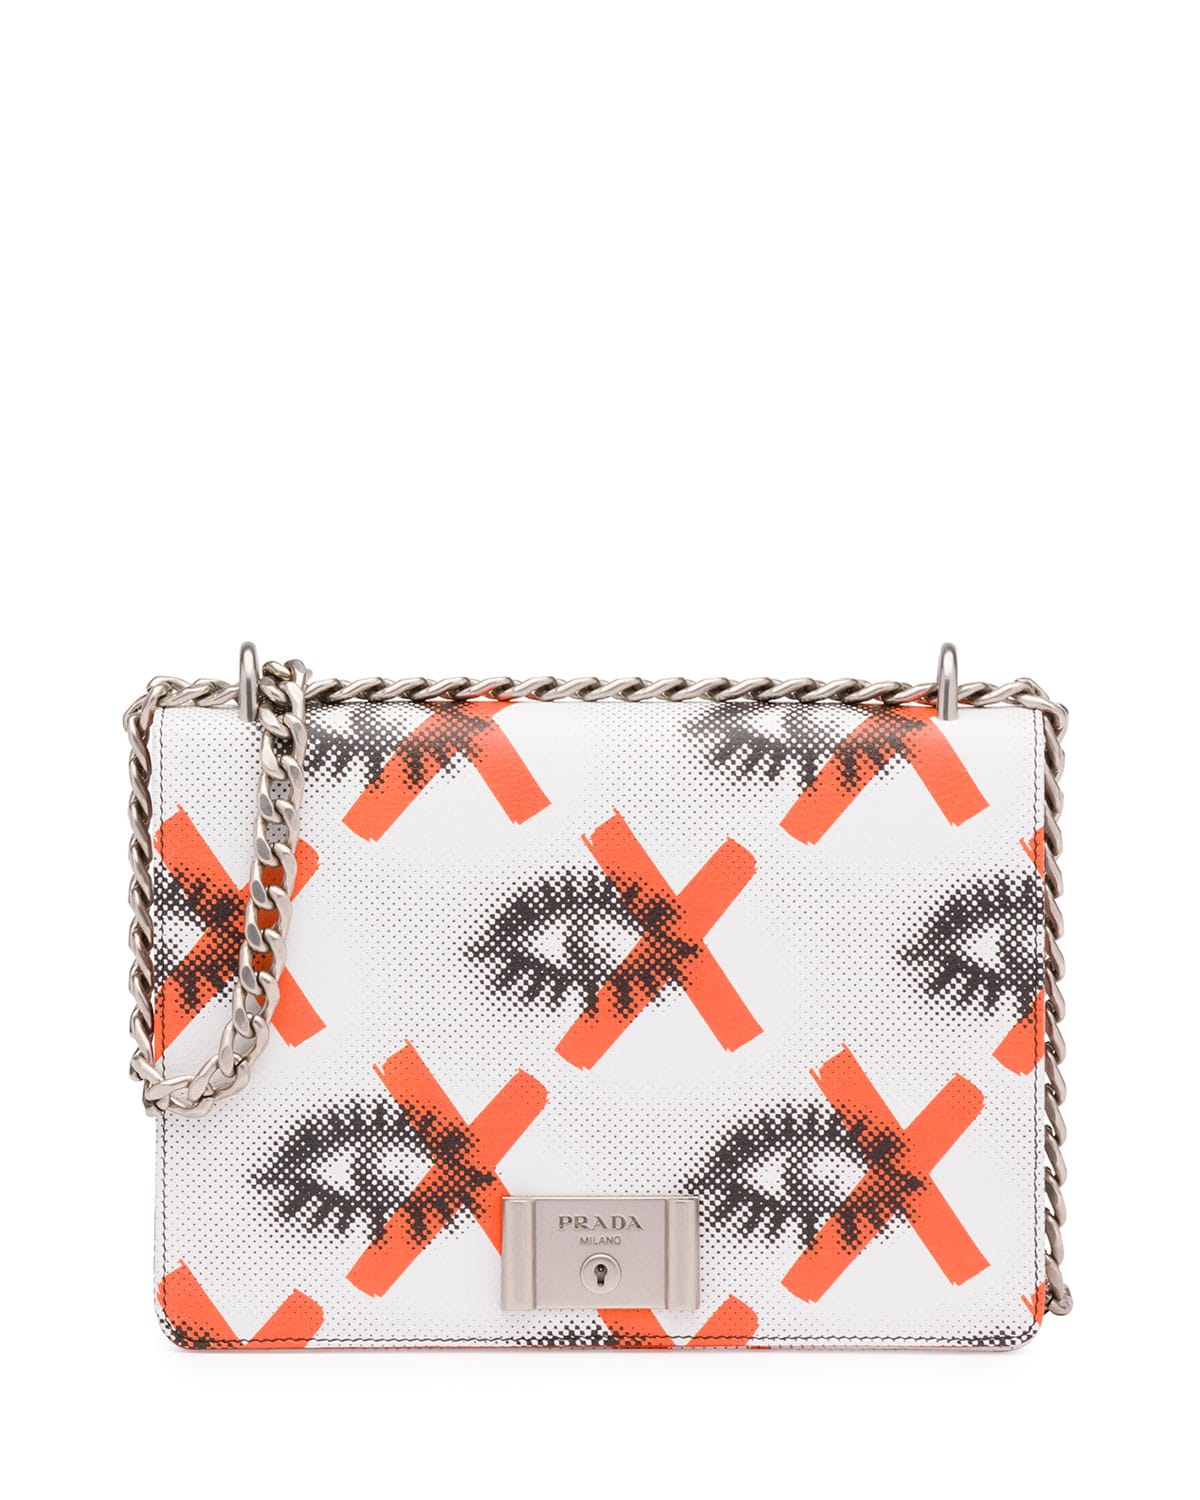 Prada Resort 2016 Bag Collection Featuring Perforated Handbags ...